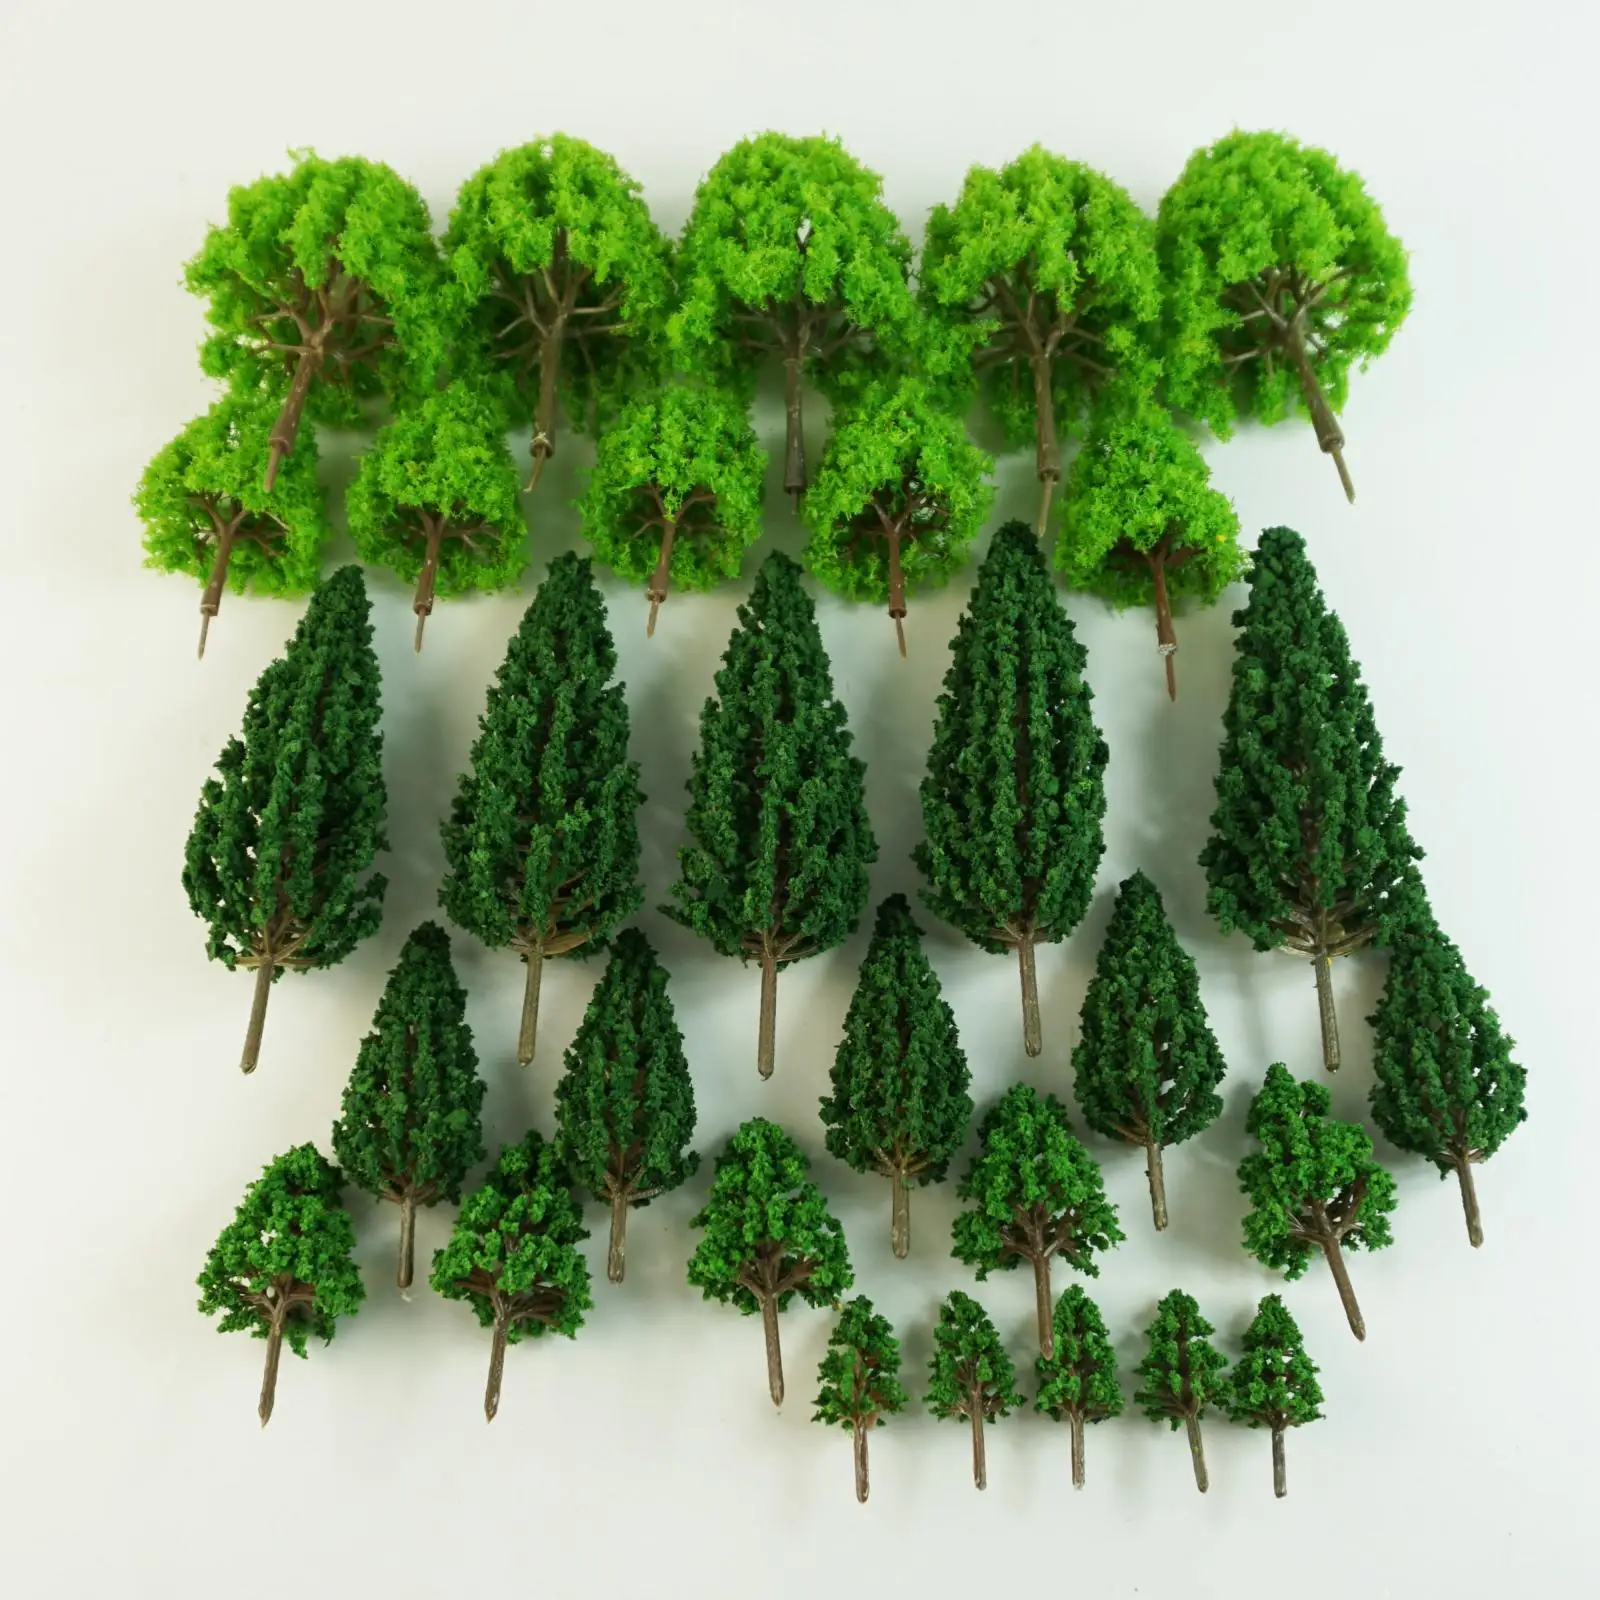 

Plastic Trees Model Green Leaves Train Railroad Railway Scene Scenery Wargame Diorama Landscape Park Street Layout